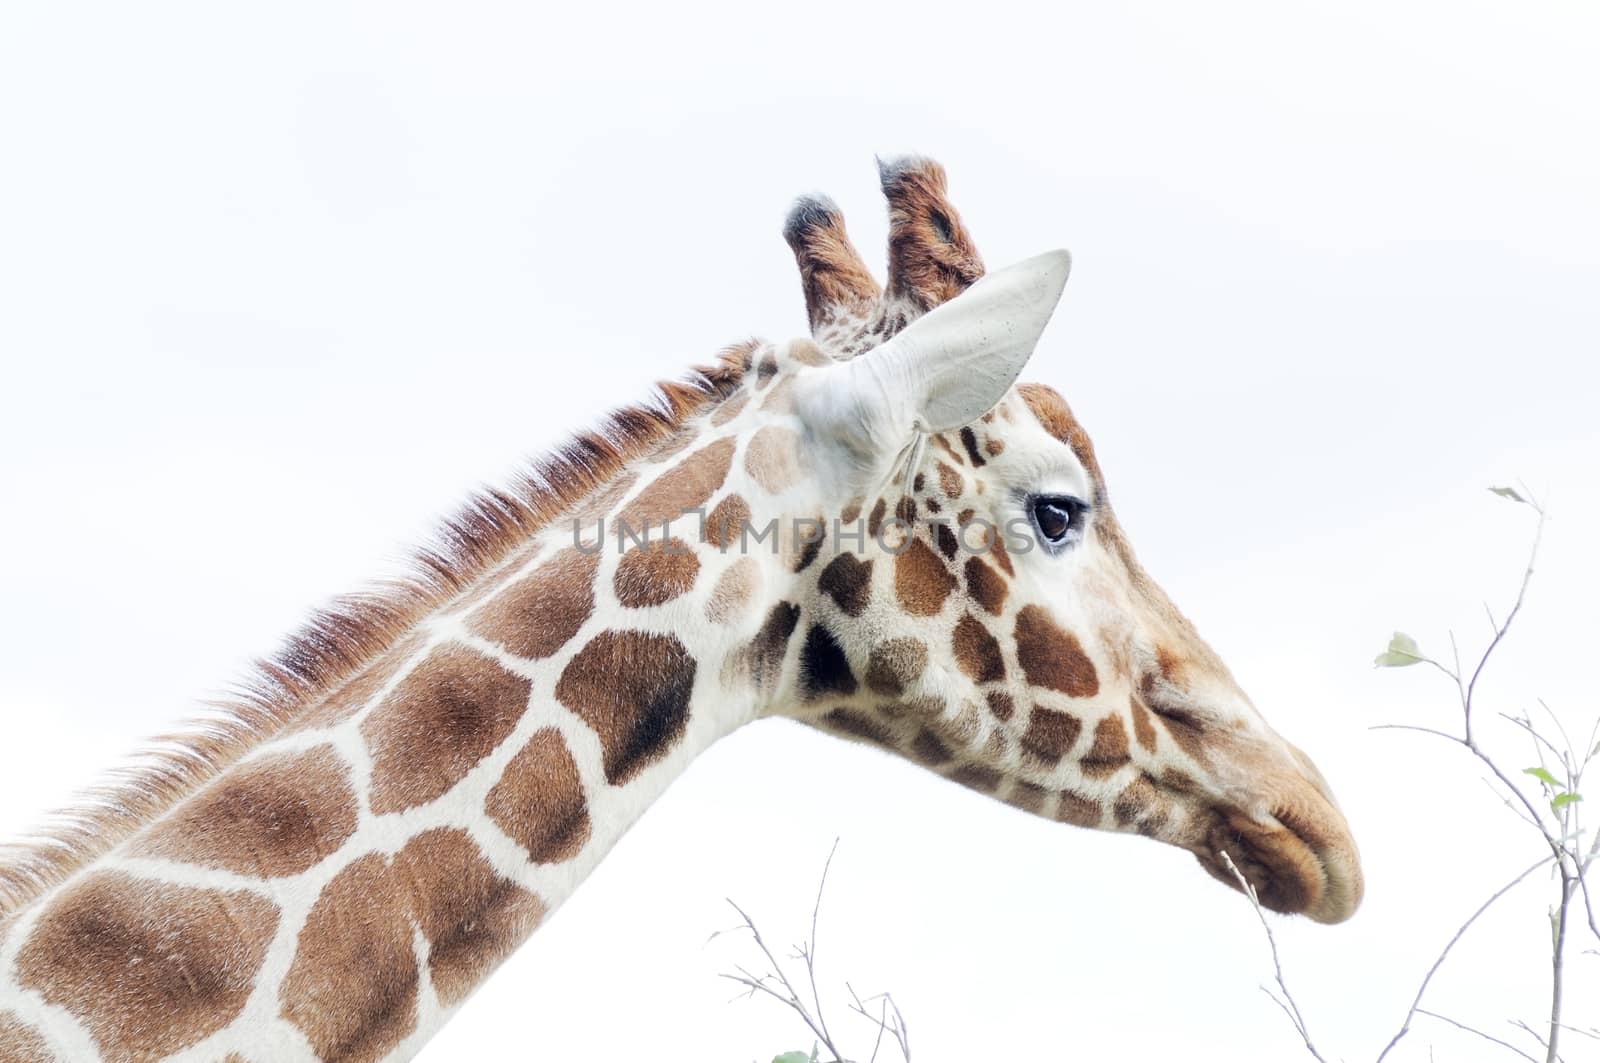 Closeup of giraffe head and neck showing fur detail